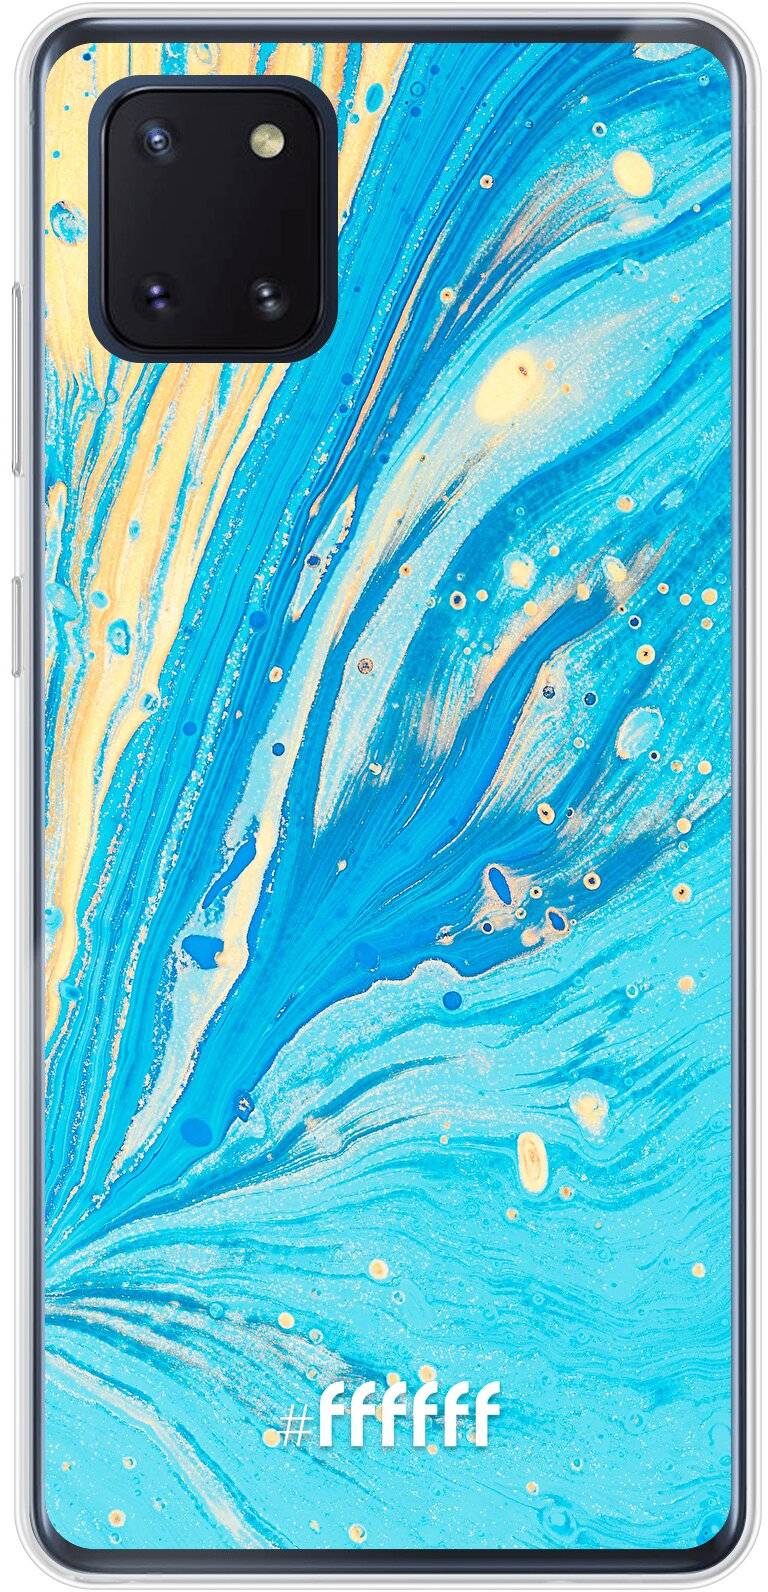 Endless Azure Galaxy Note 10 Lite